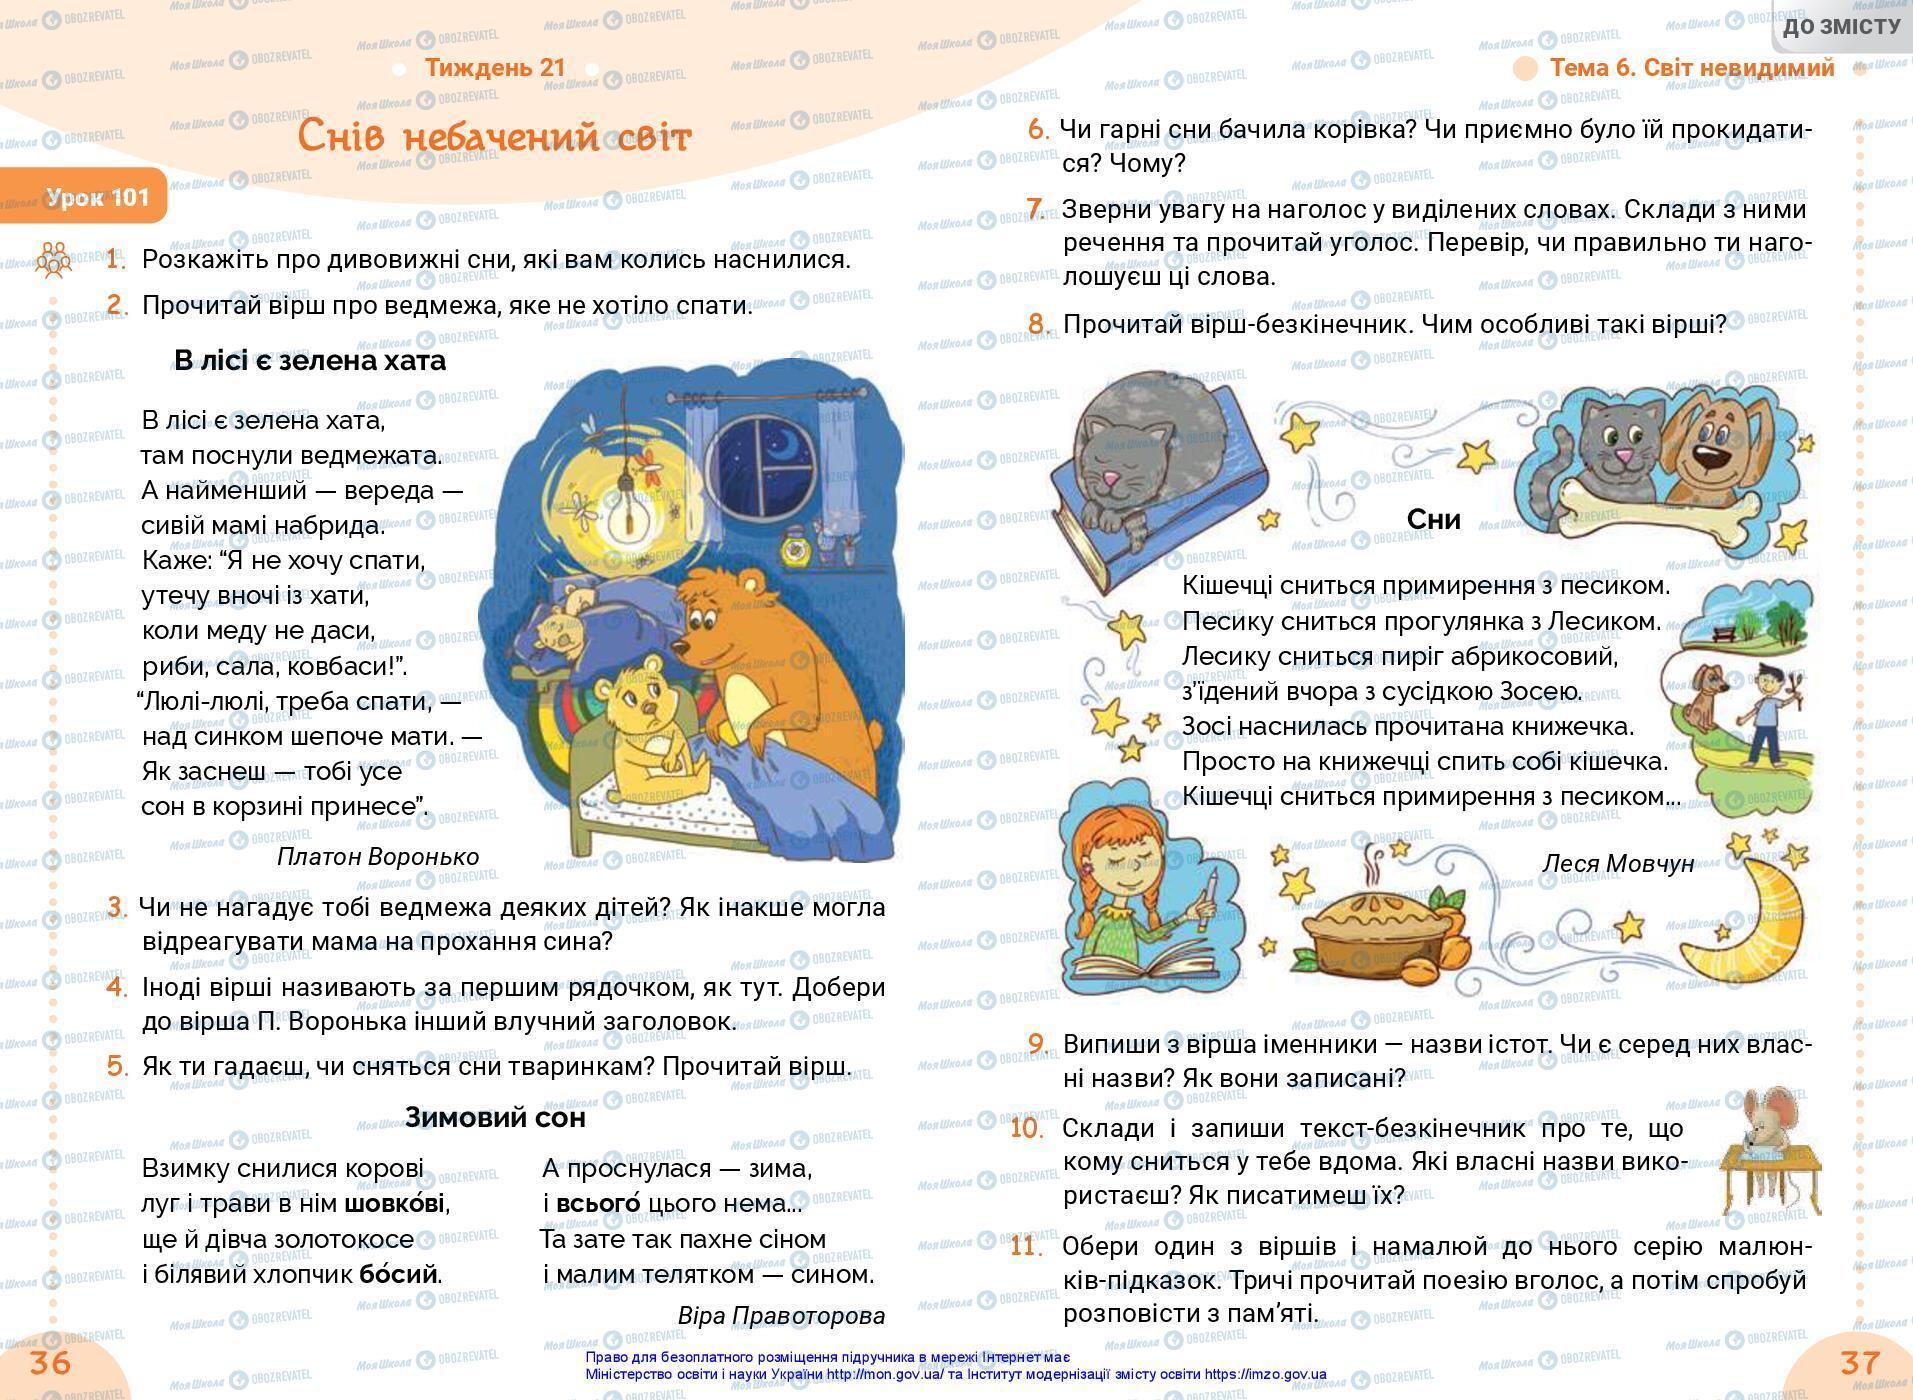 Учебники Укр мова 3 класс страница 36-37